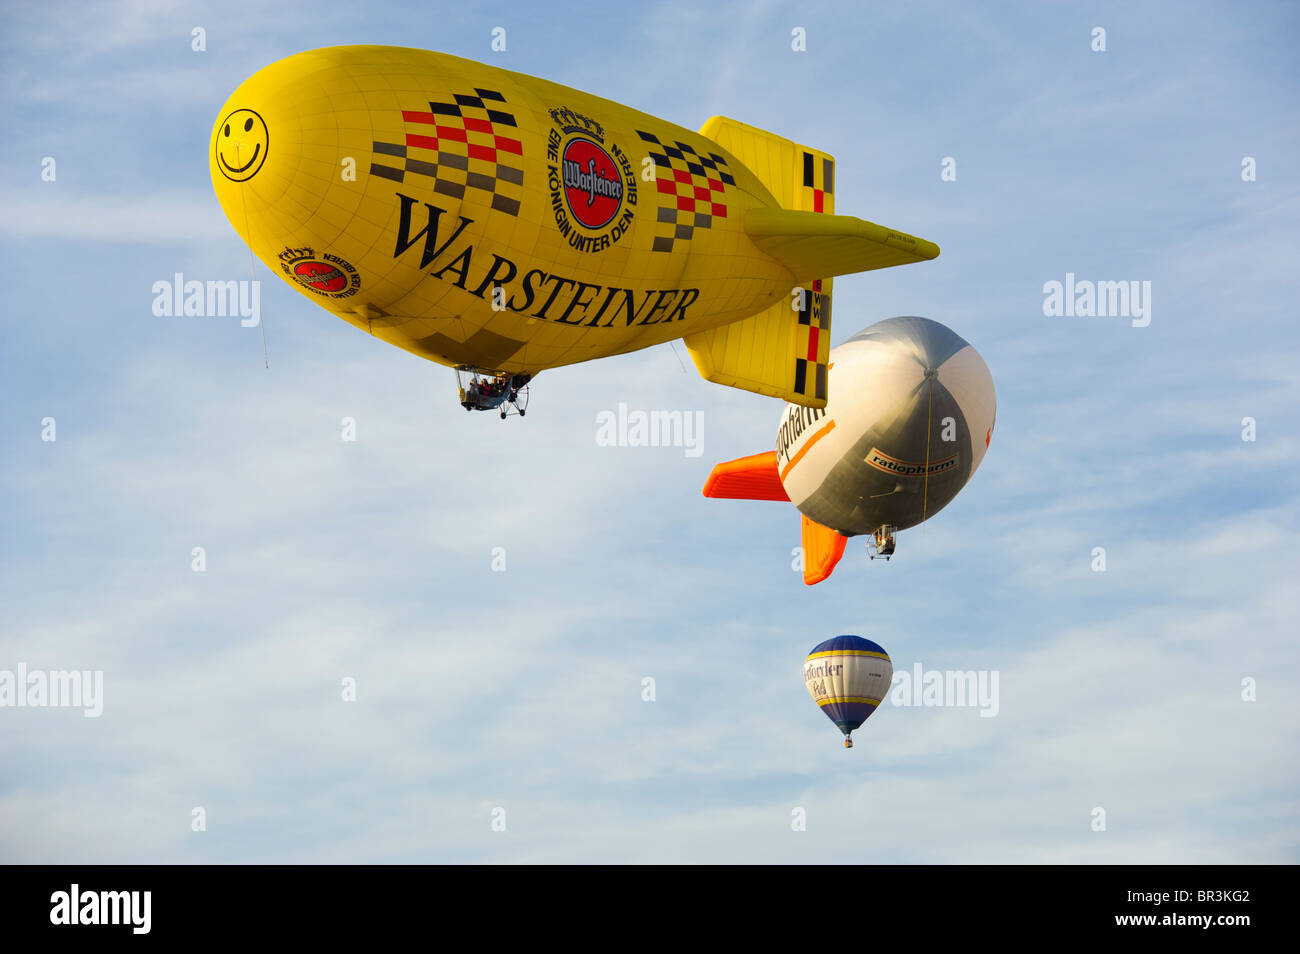 Hot Air Balloon Festival 2010 à Warstein Allemagne Banque D'Images